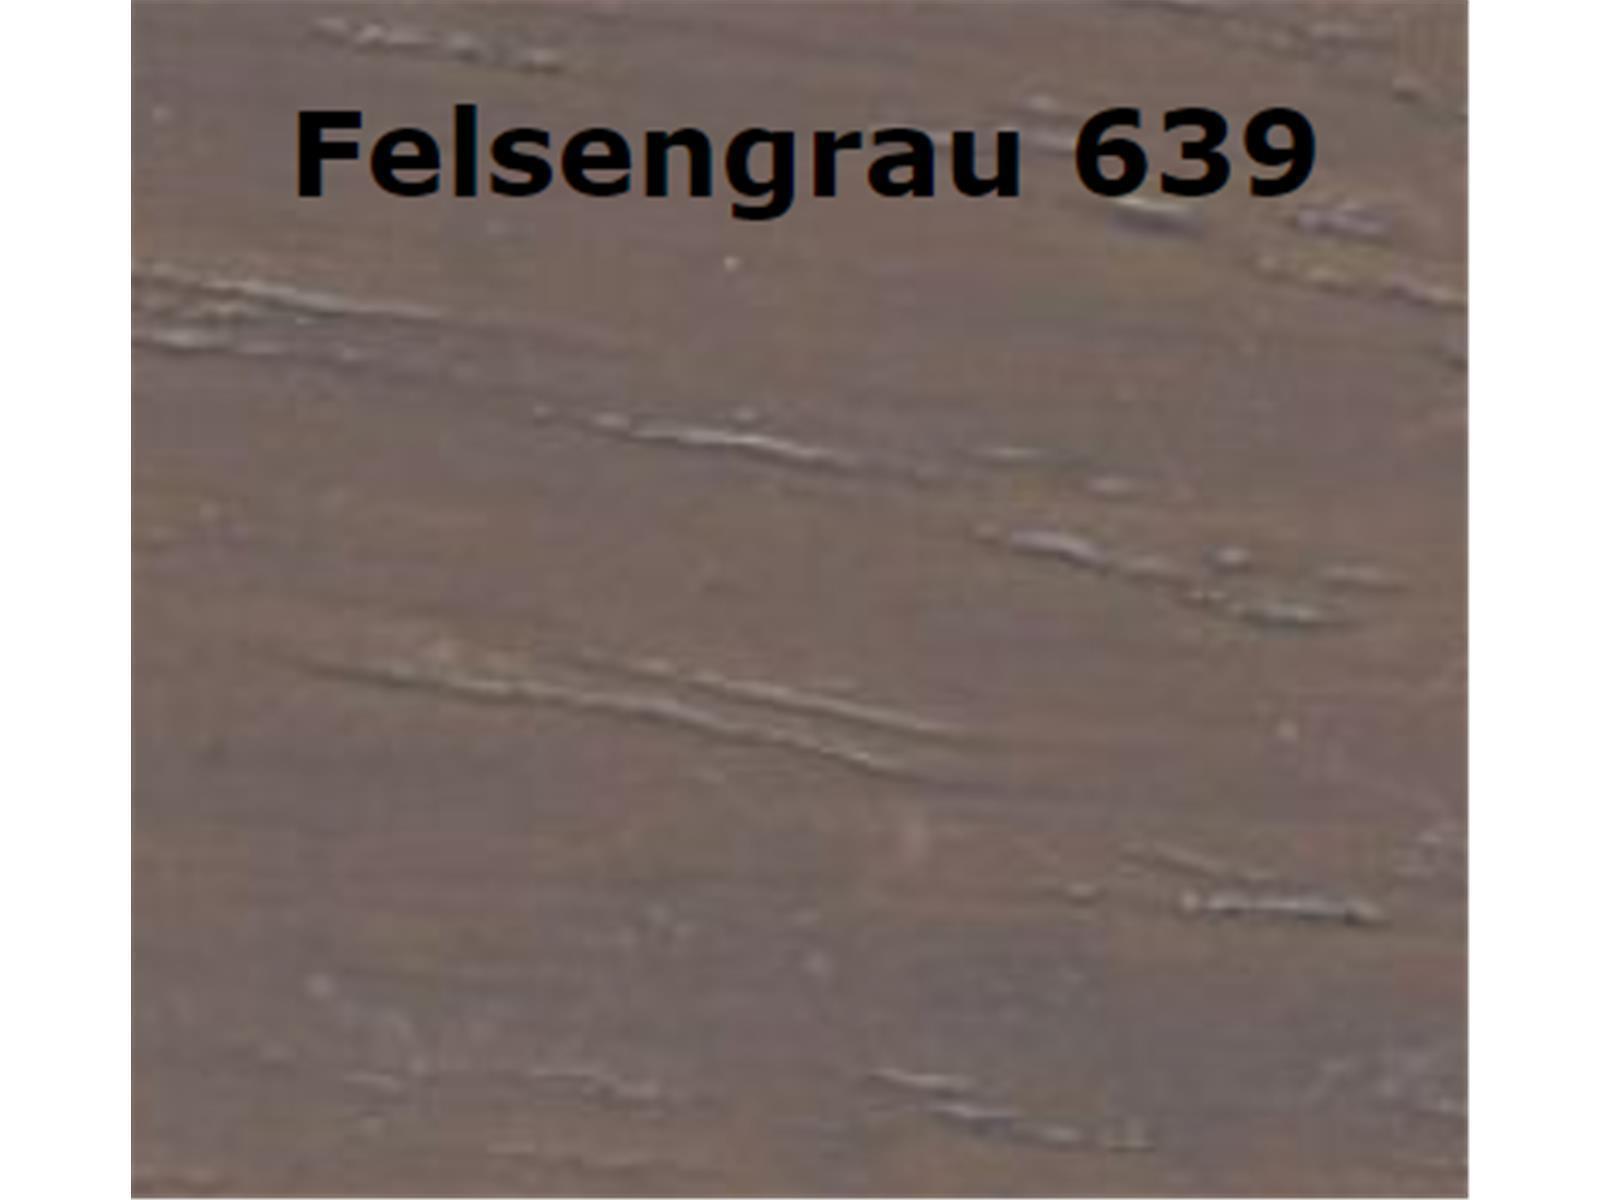 Jotun Trebitt Holzlasur Holz- und Wetterschutzlasur 0,75 L FELSENGRAU 639